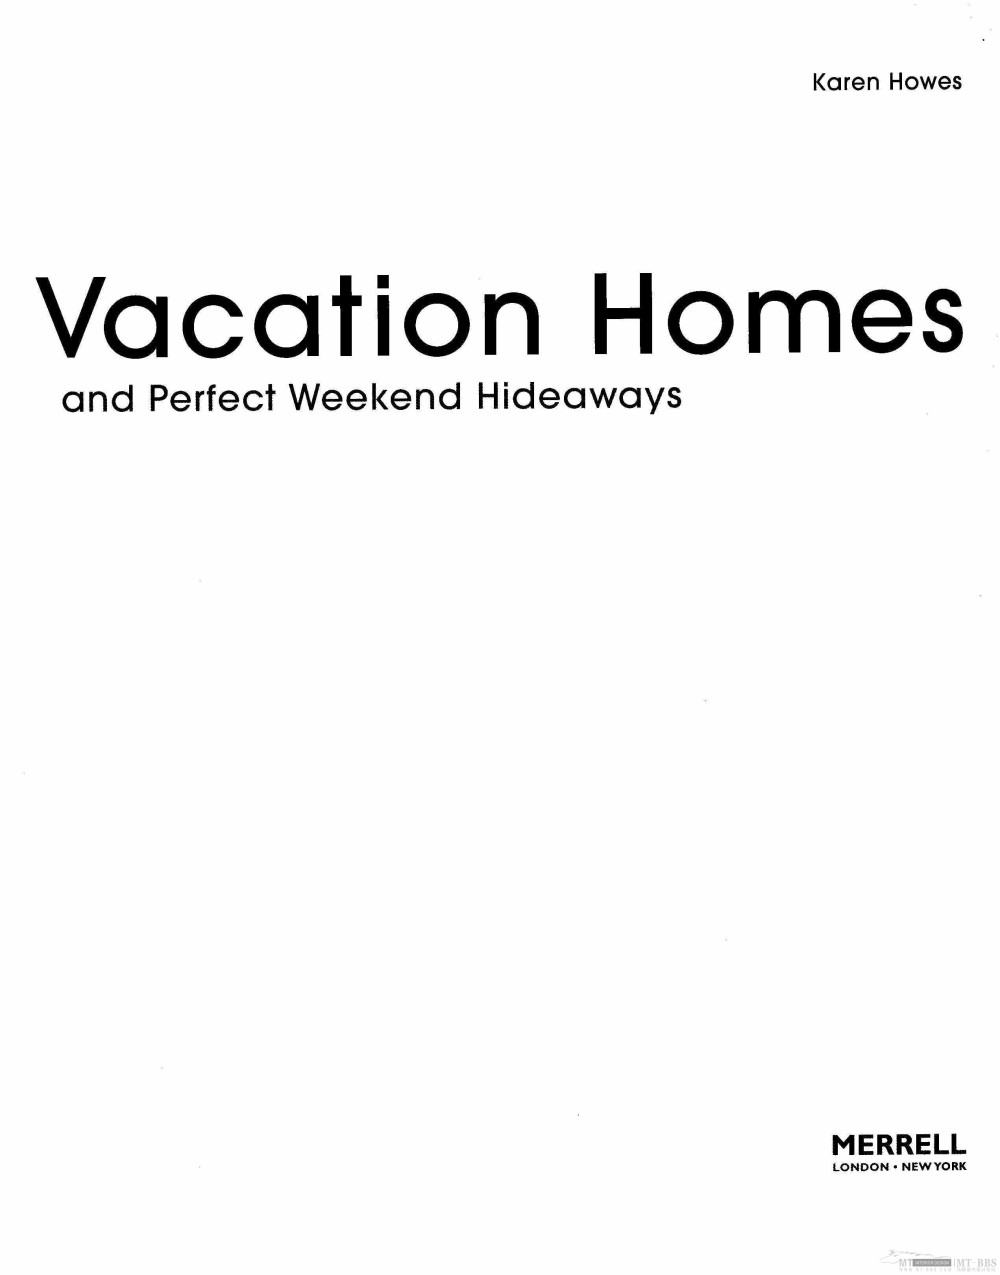 vacation homes度假屋 (二)_jpg (4).jpg